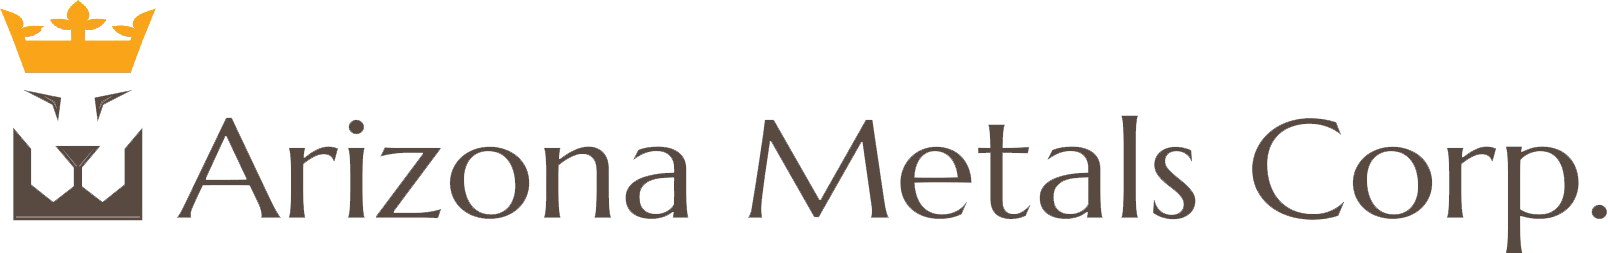 Arizona Metals Corp. Logo